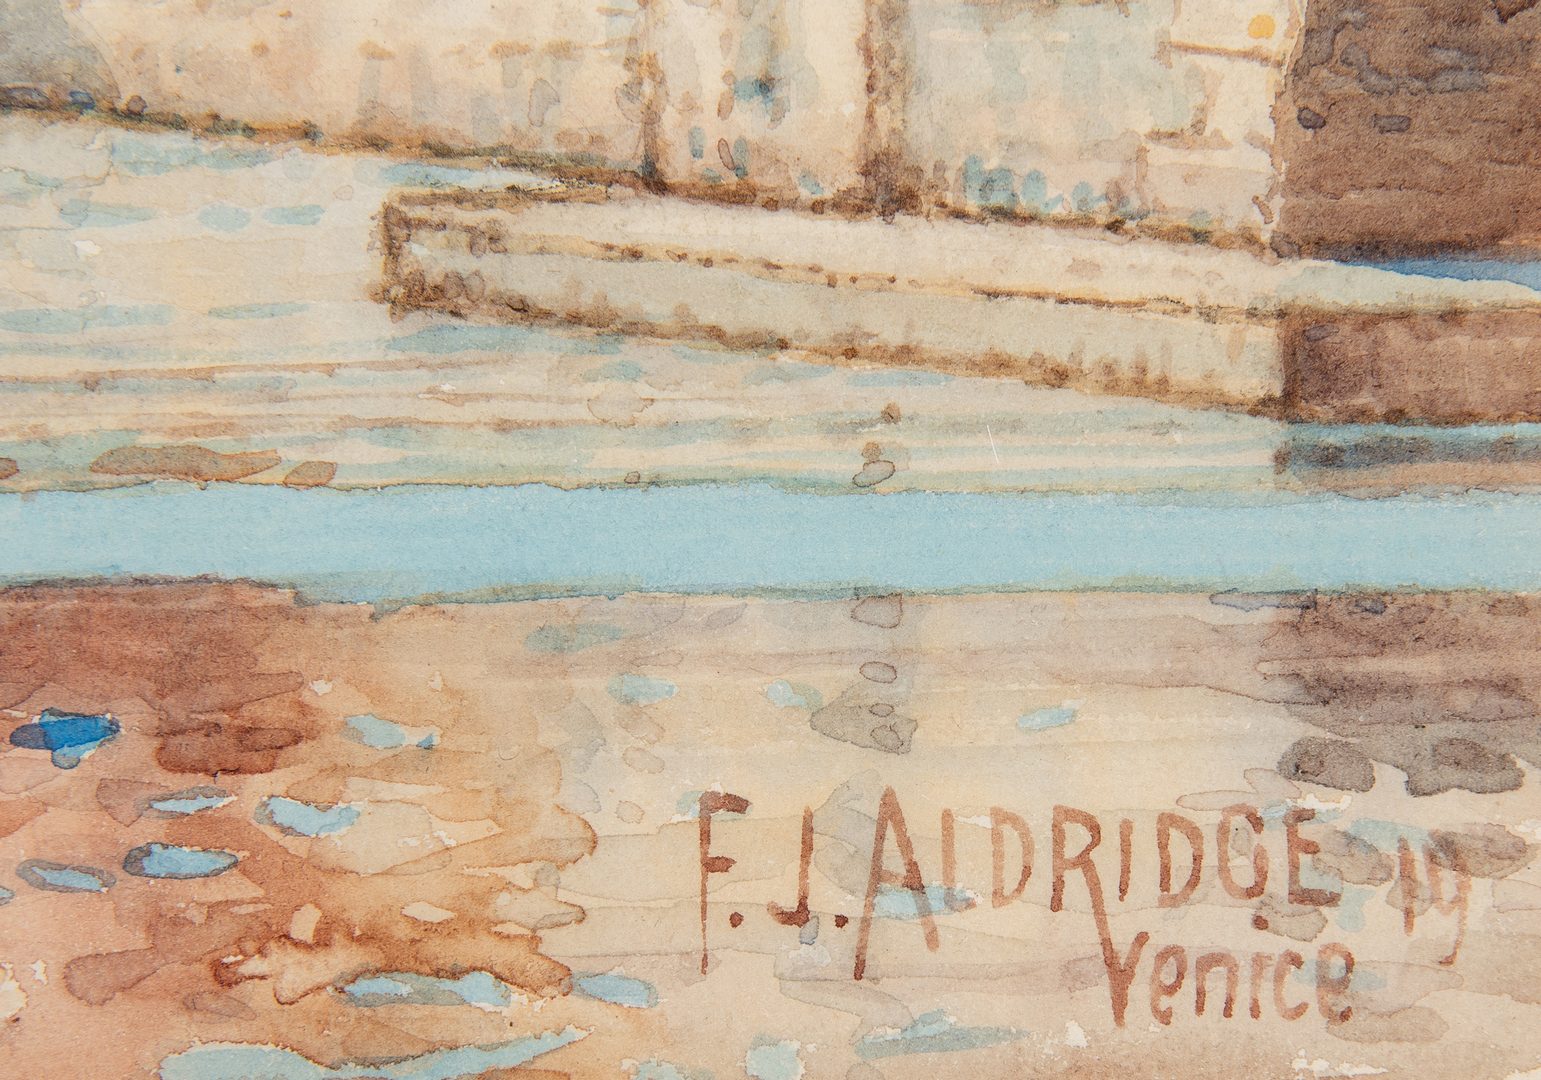 Lot 682: Frederick James Aldridge W/C, View of Venice